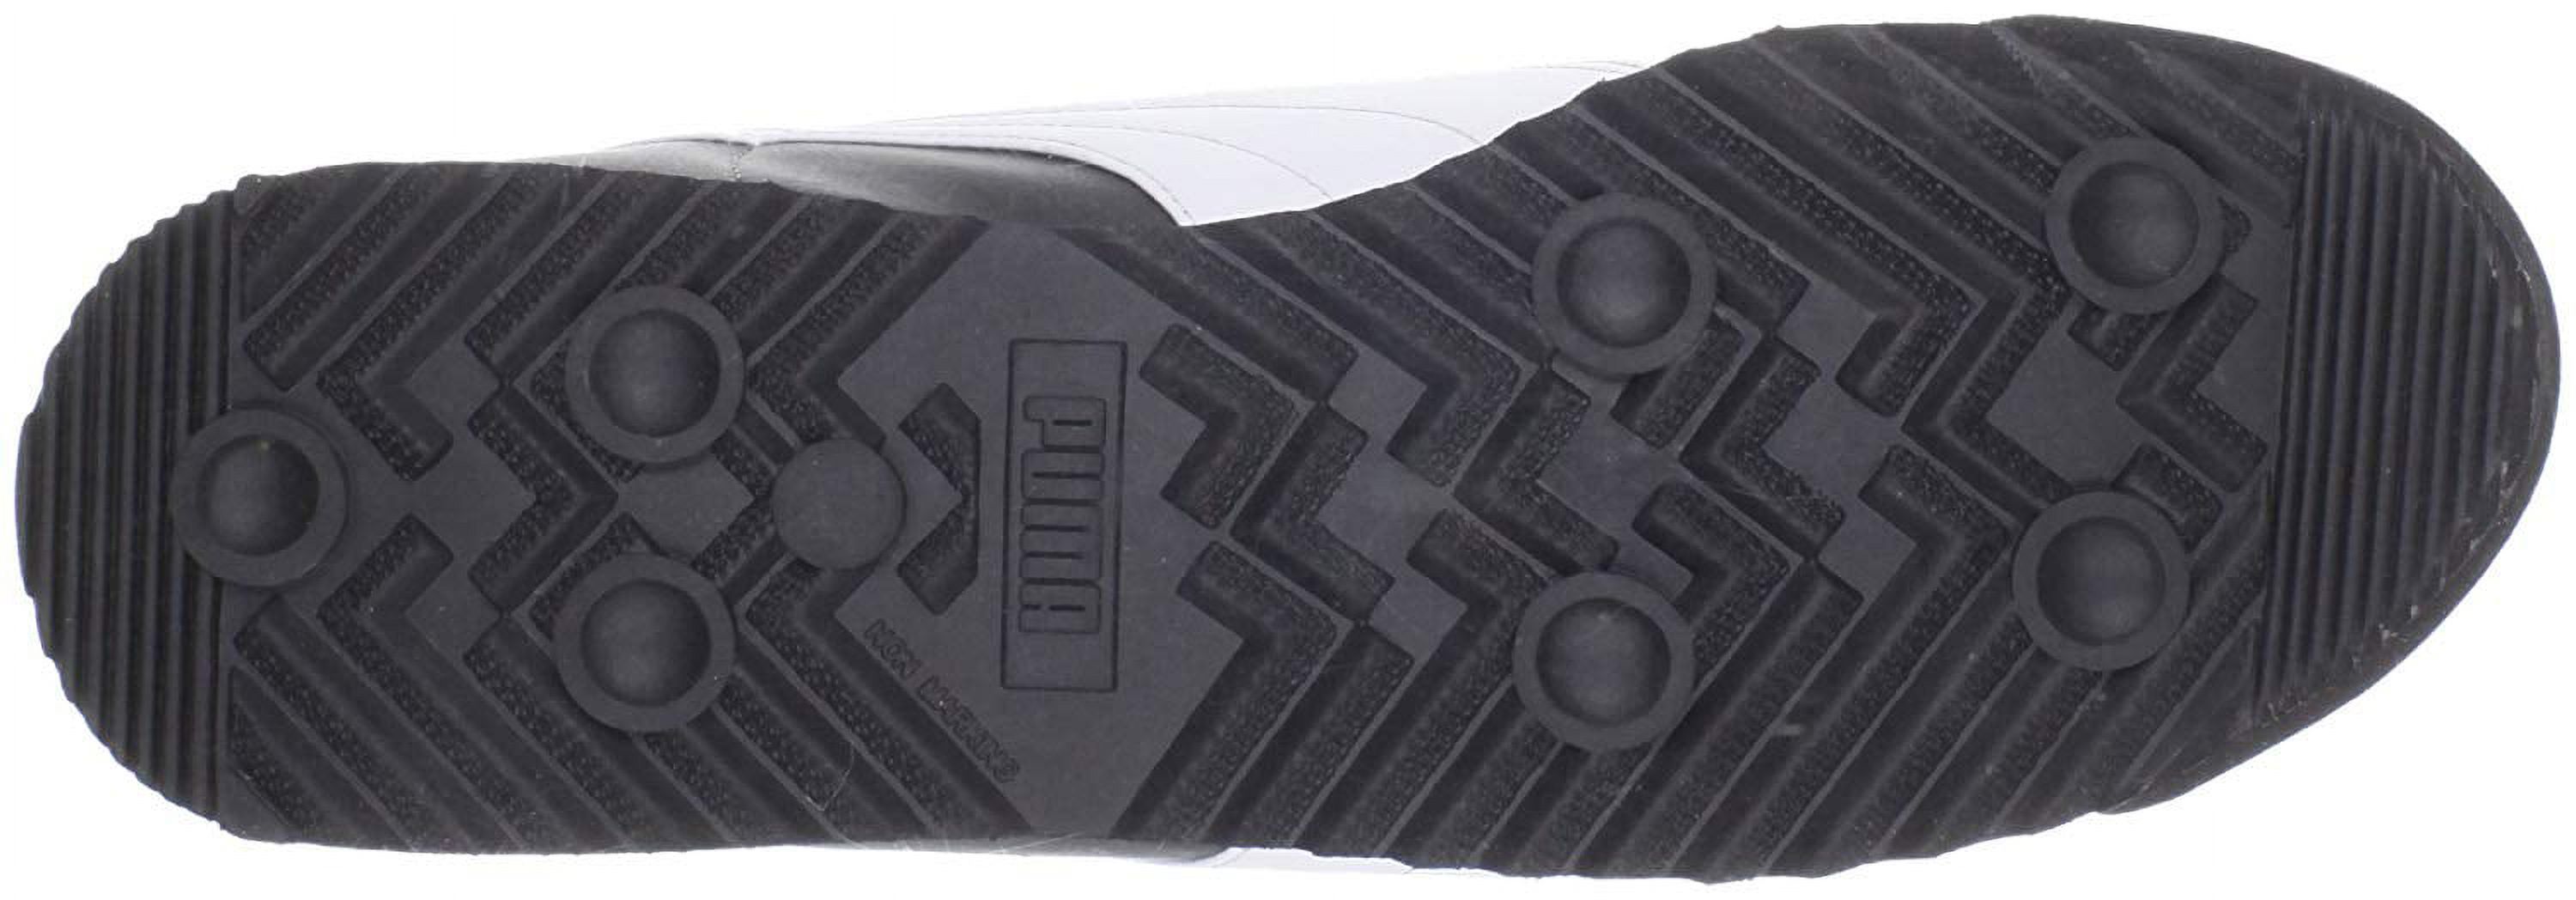 Puma Roma Basic Men's Shoes Black/White/Puma Sliver 353572-11 - image 4 of 7